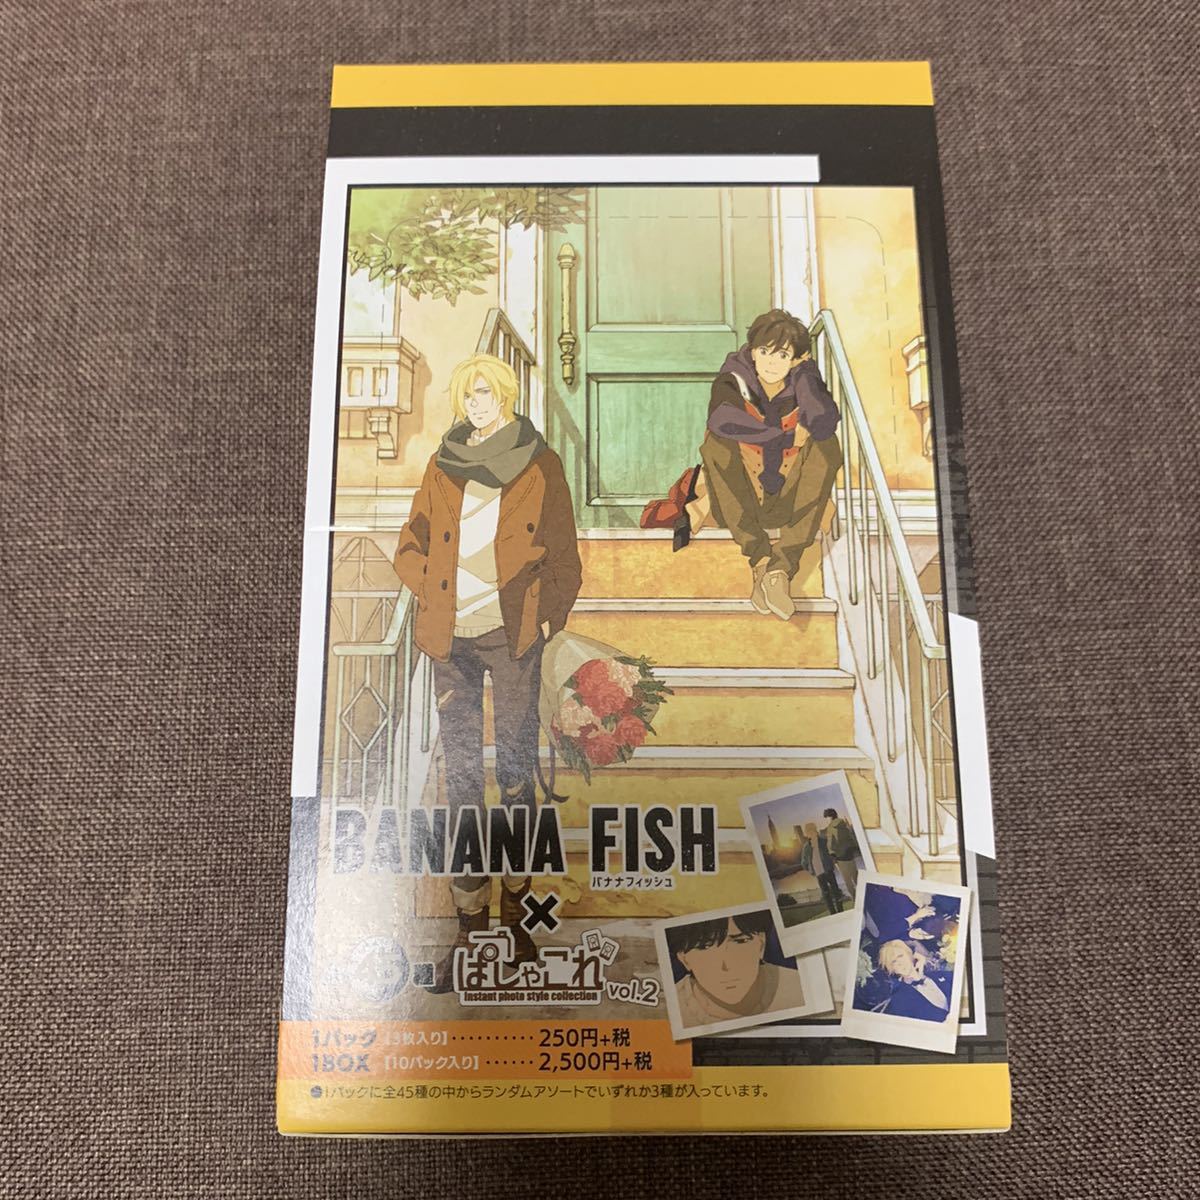 BANANA FISH ぱしゃこれ vol.2 BOX 10パック 30枚 新品未開封 バナナフィッシュ